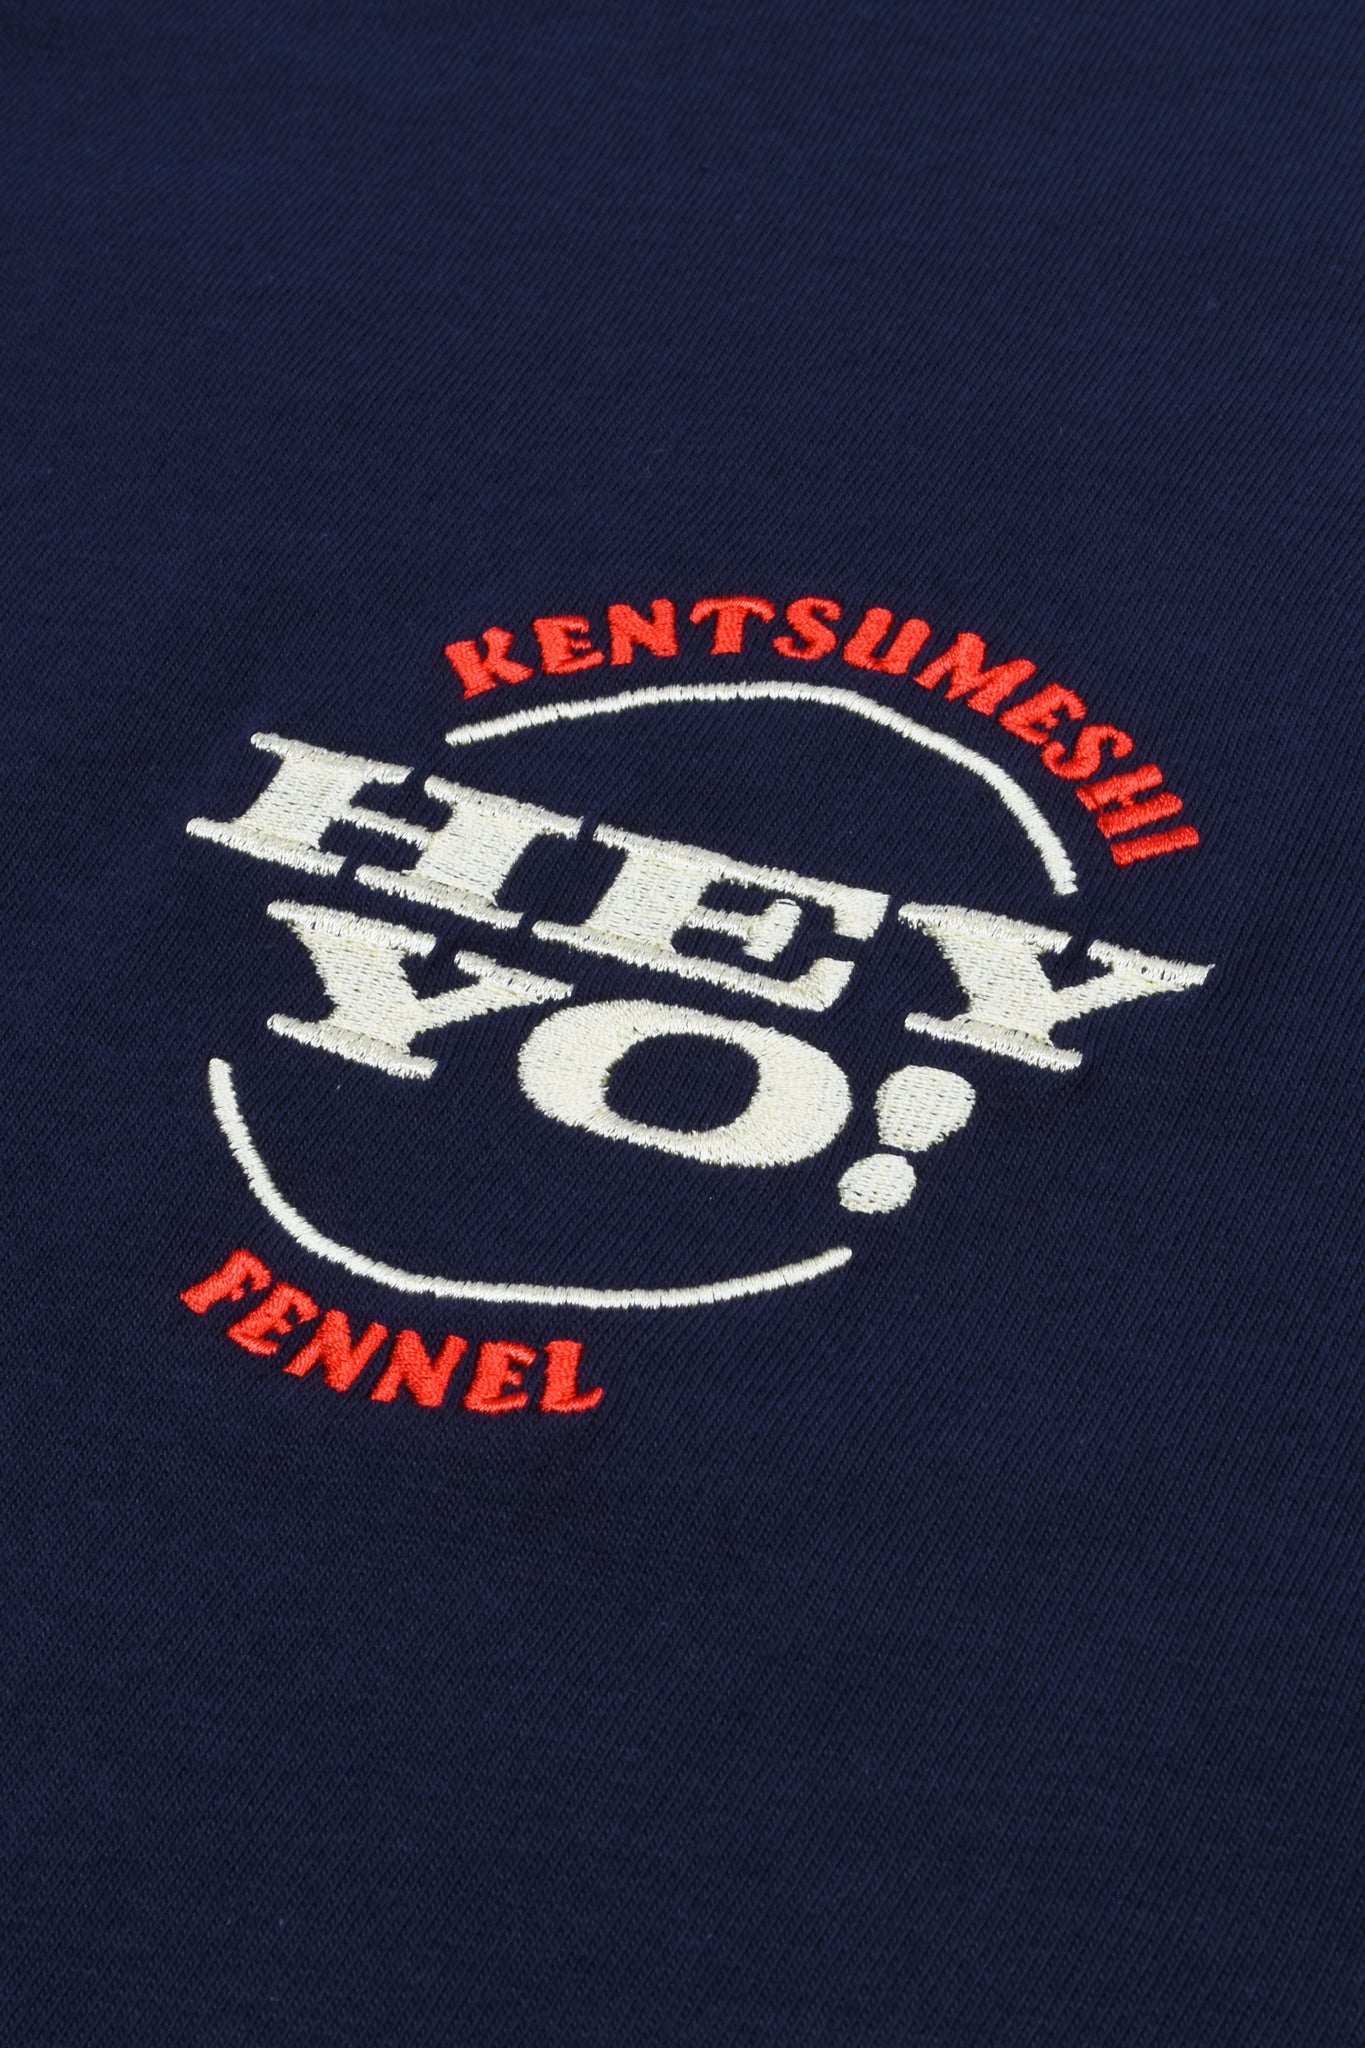 KENTSUMESHI EMBROIDERY HEY YO! T-SHIRT/NAVY